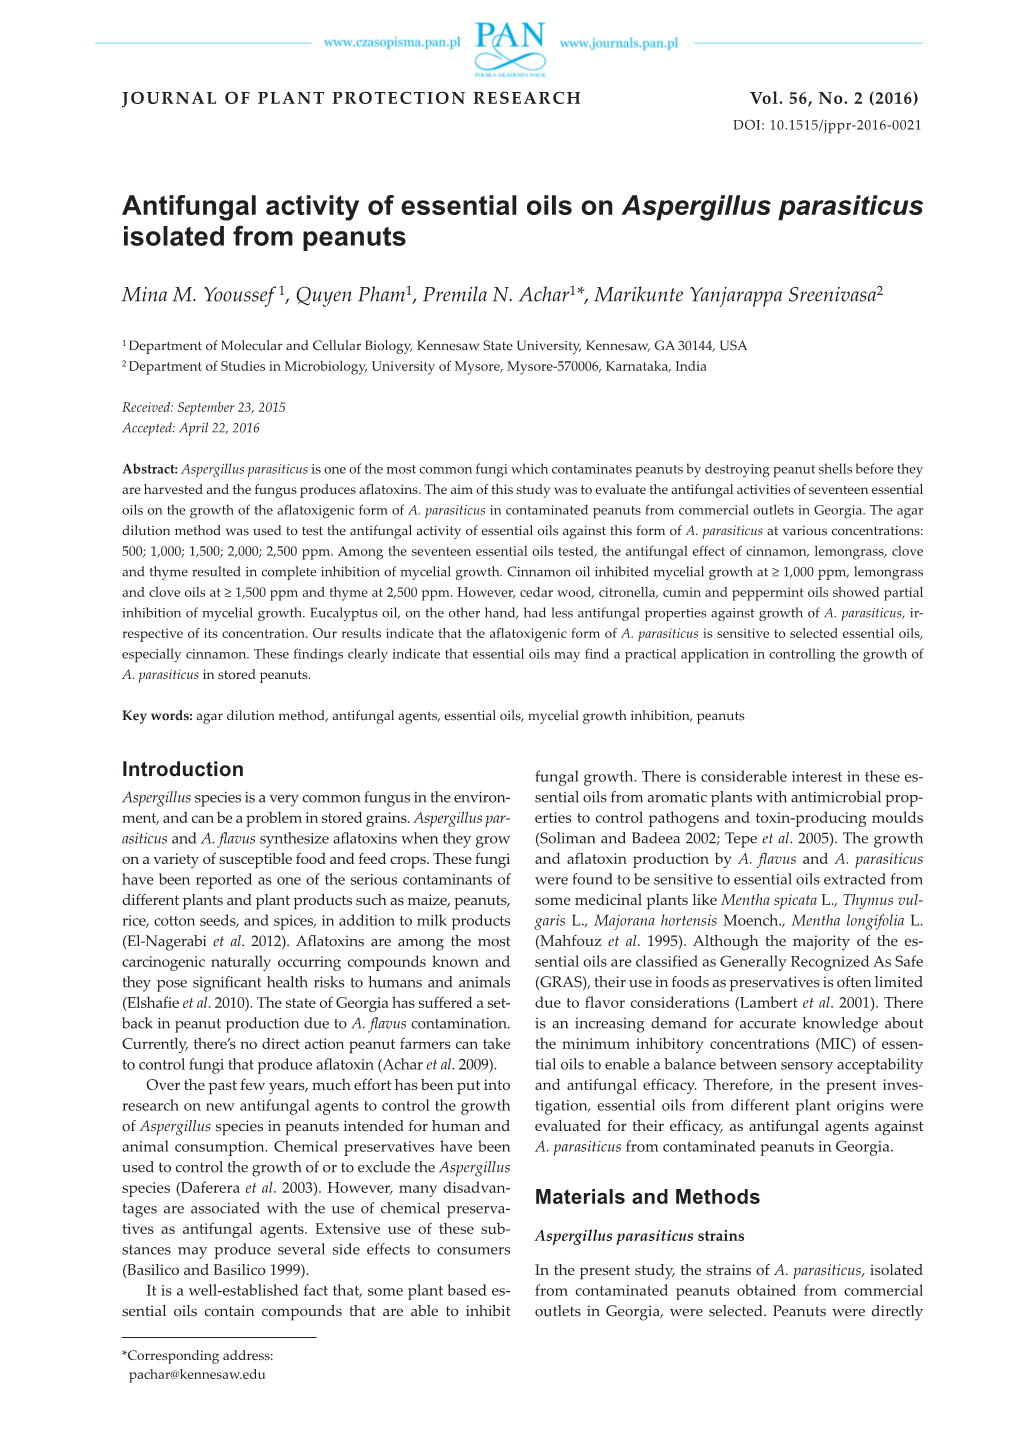 Antifungal Activity of Essential Oils on Aspergillus Parasiticus Isolated from Peanuts